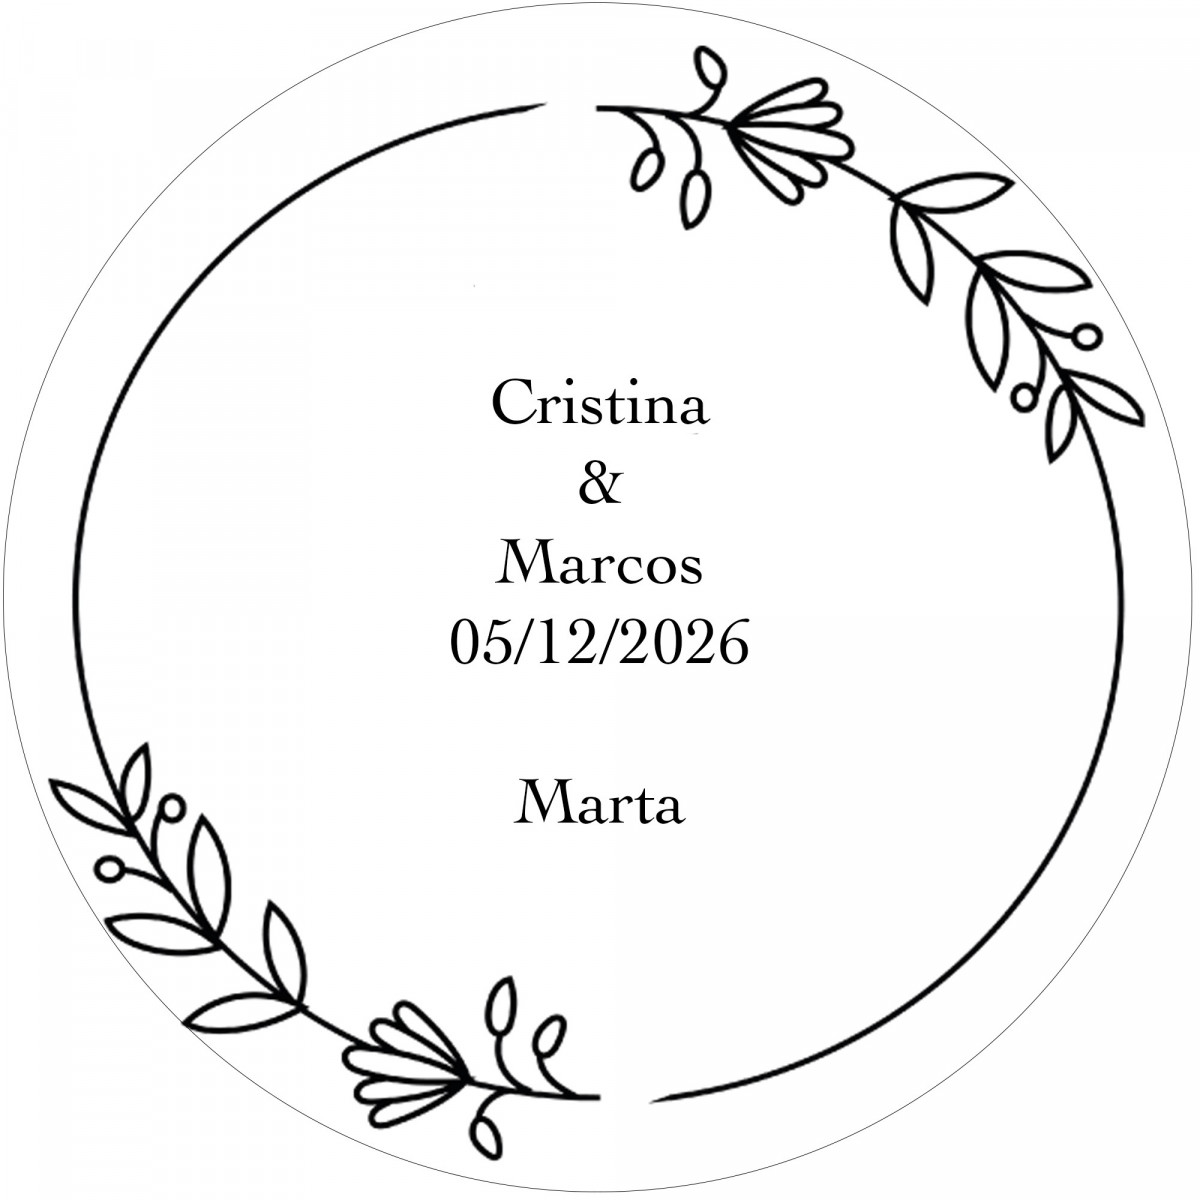 Adesivo redondo personalizado com o nome dos convidados e dos noivos